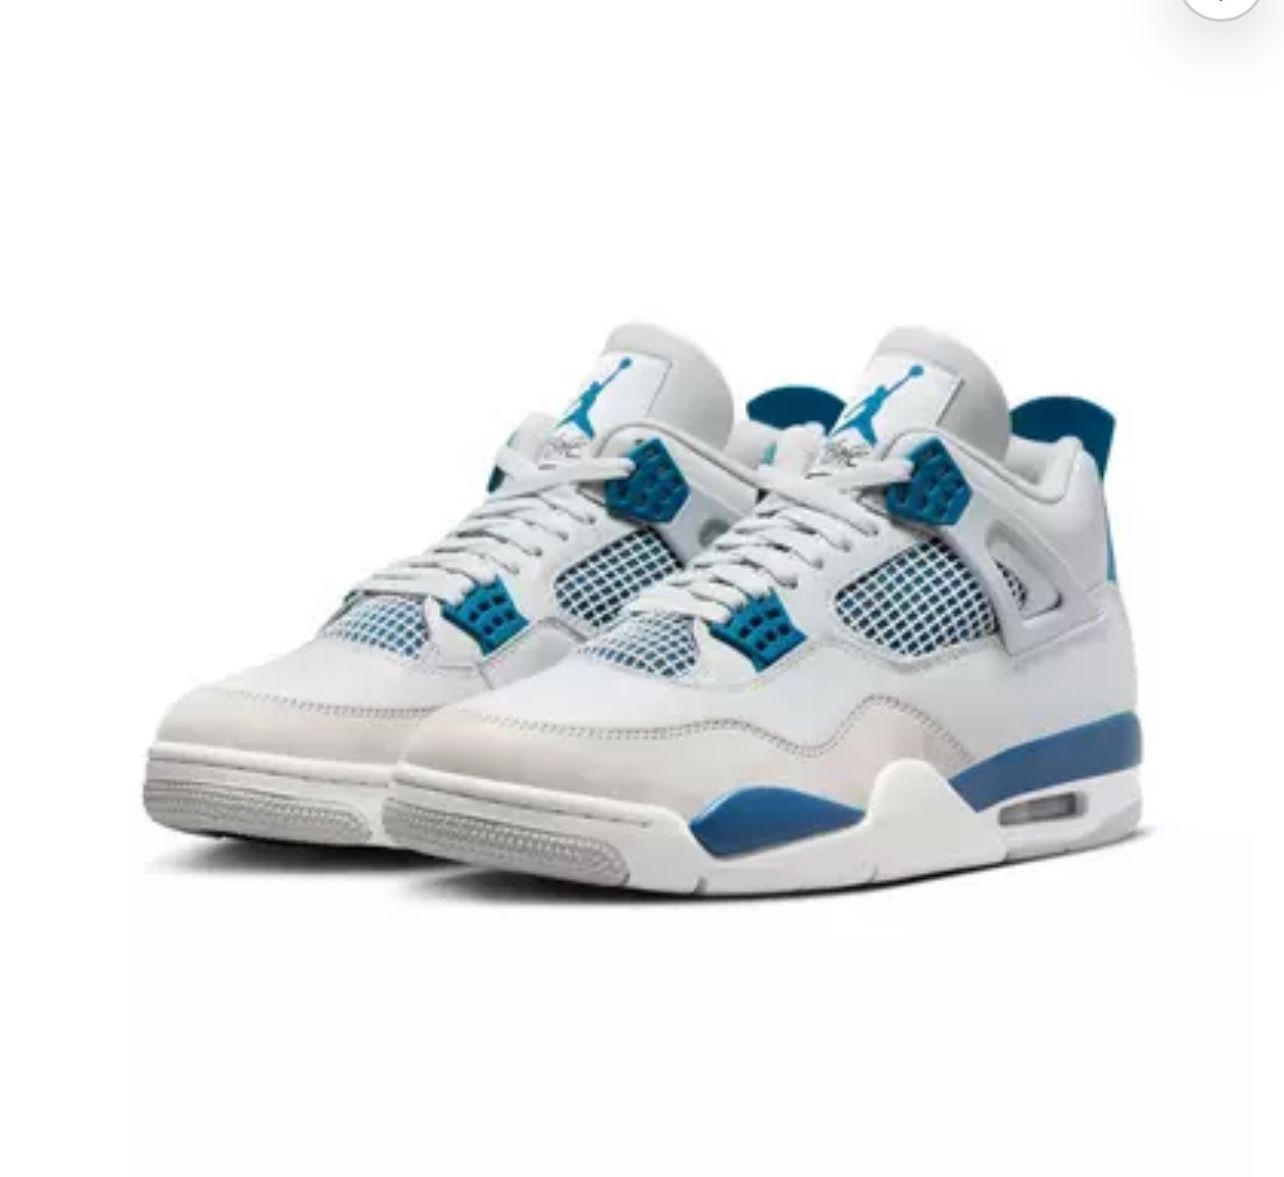 Jordan 4 Retro "Industrial Blue" 2024 Men's Shoe Size 10.5. Condition is New